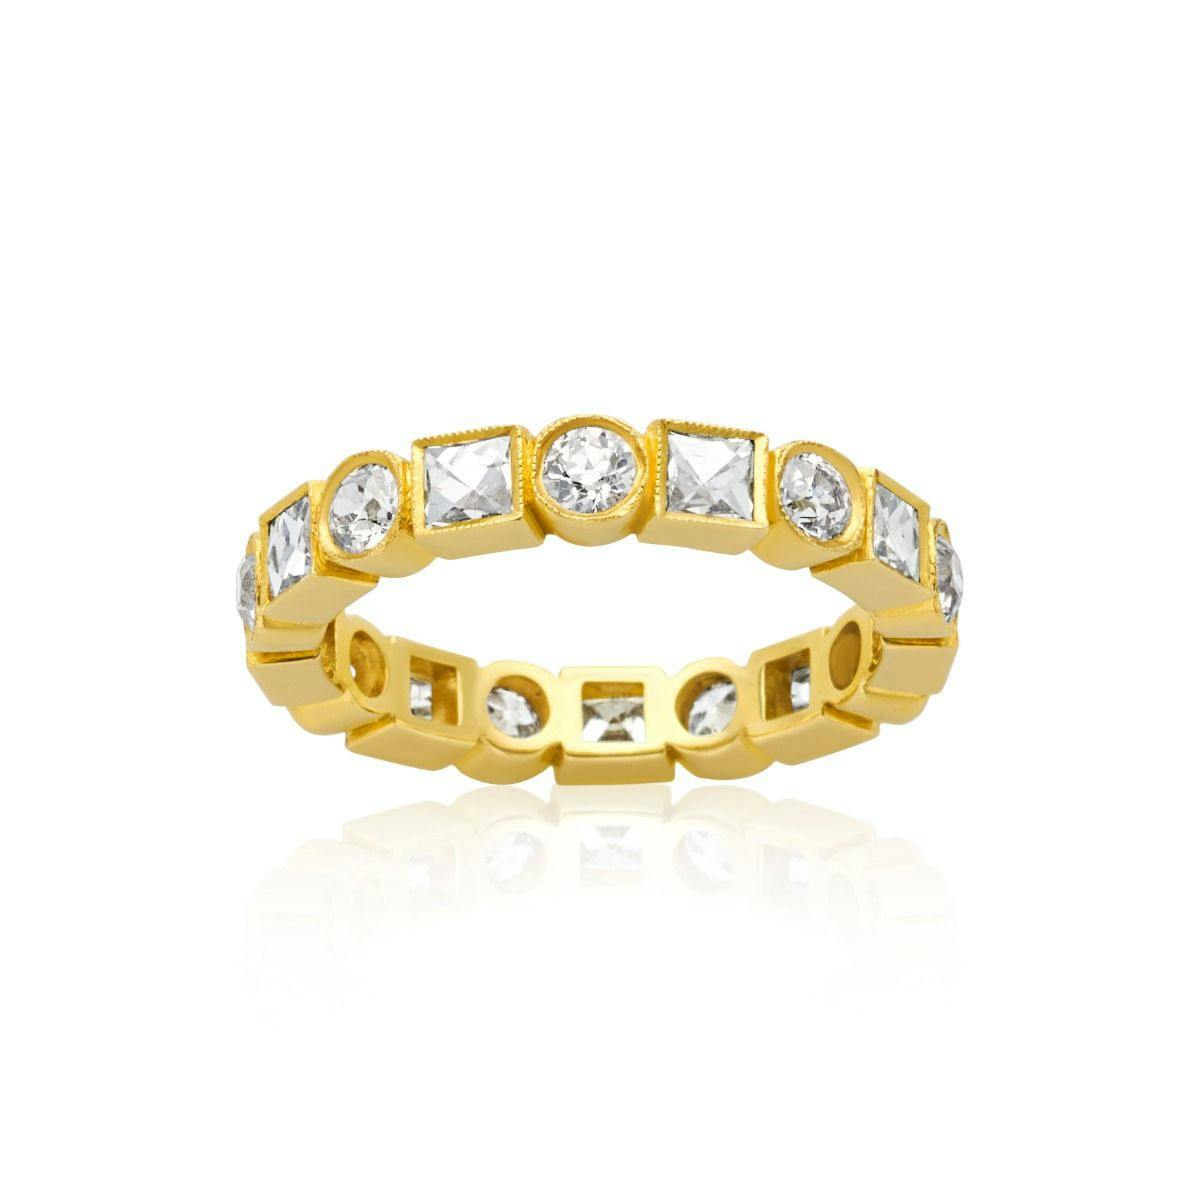 Single Stone Brecken 18k Yellow Gold Eternity Ring